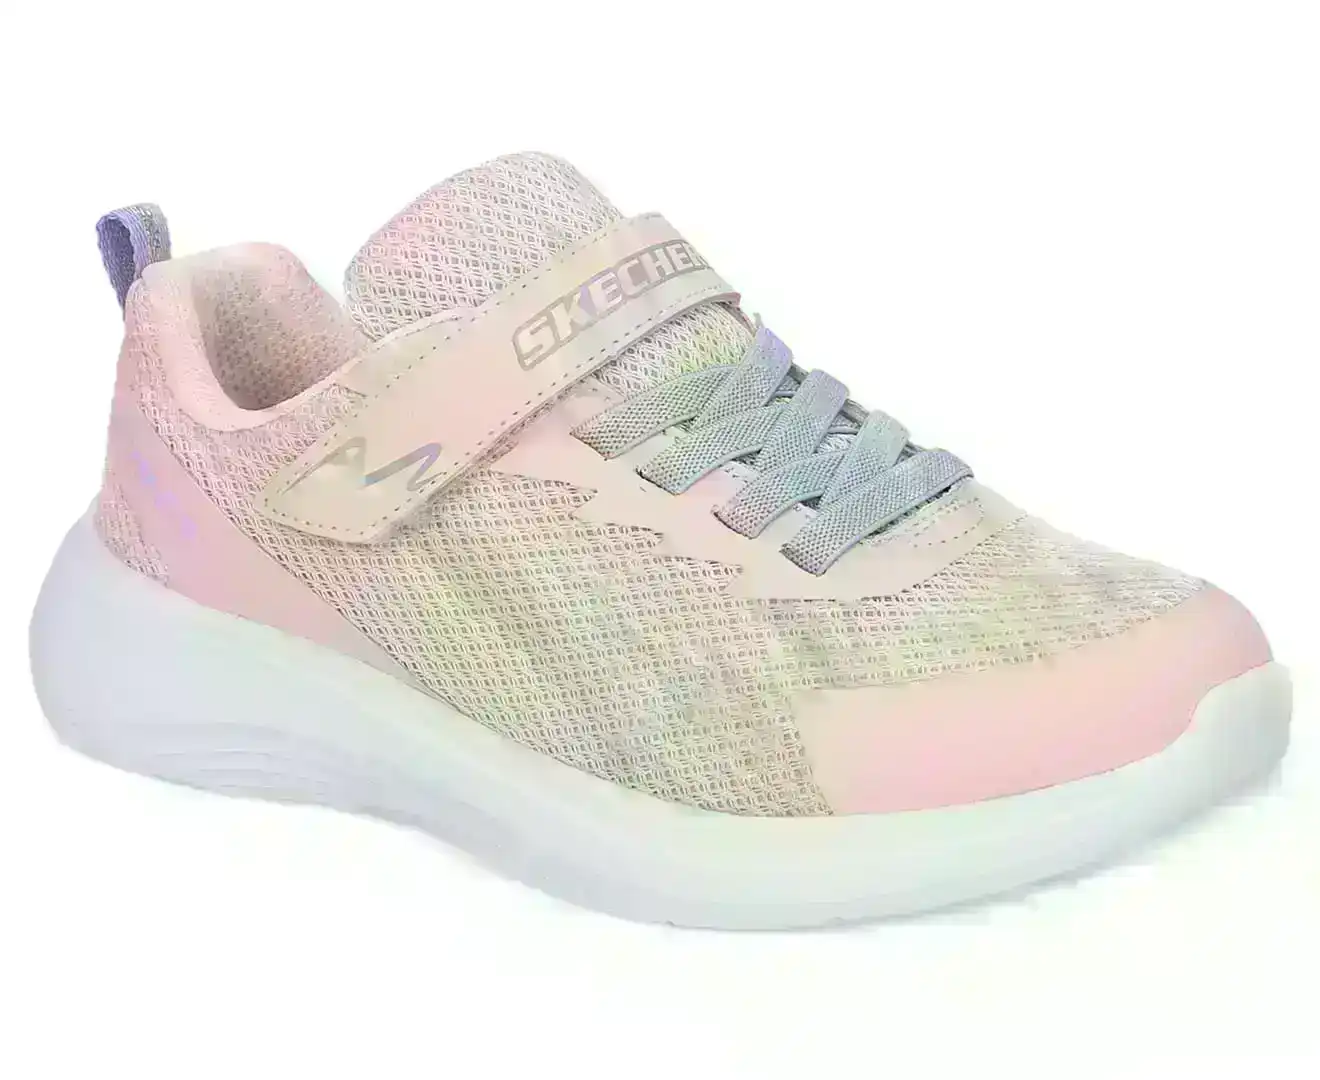 Kids Skechers Selectors - Jammin' Jogger Light Pink Comfy Running Shoe